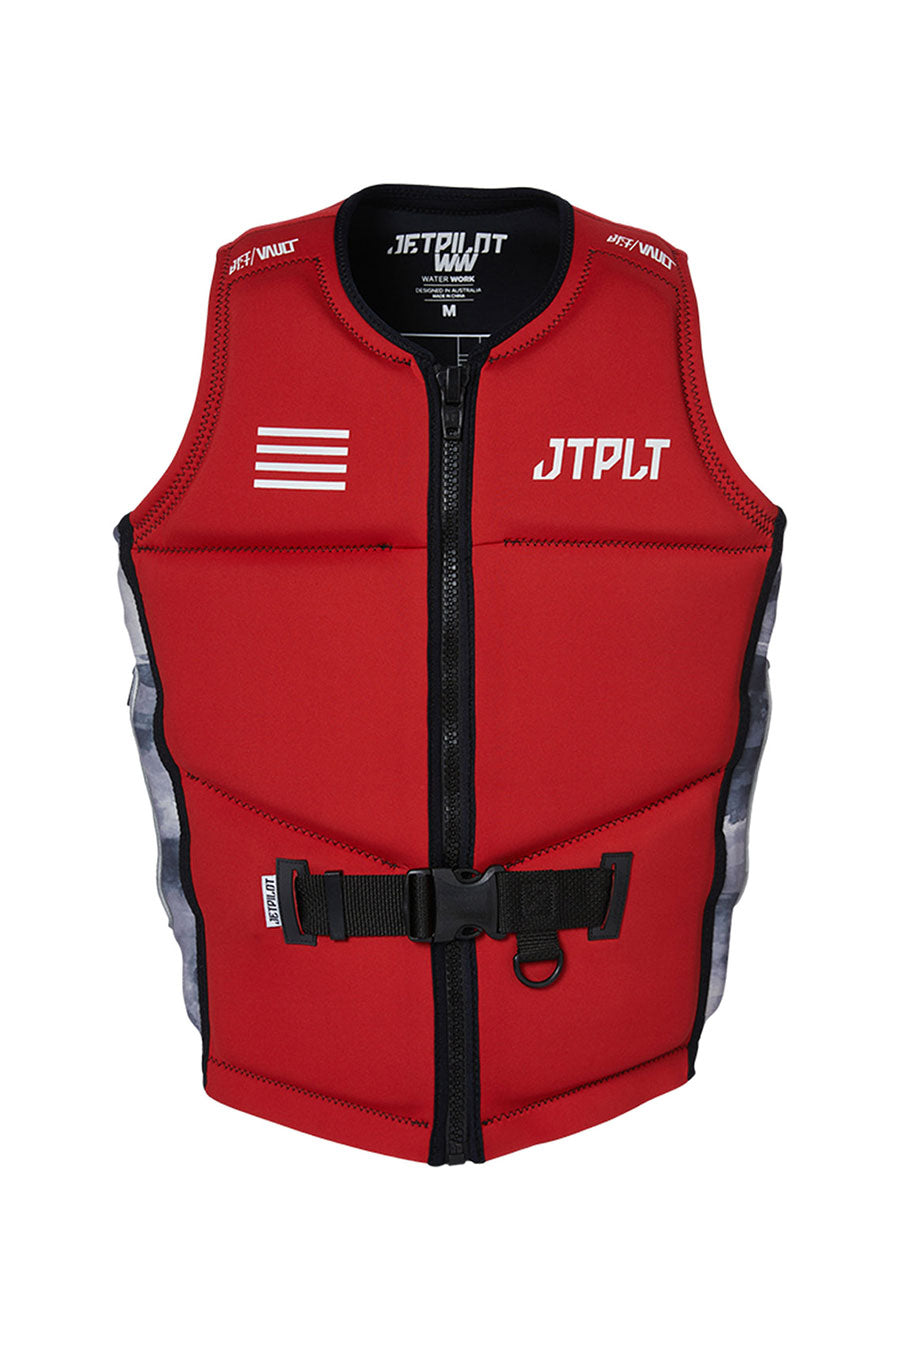 Jetpilot Rx Vault Mens F/E Neo Life Jacket - RED BLACK CAMO